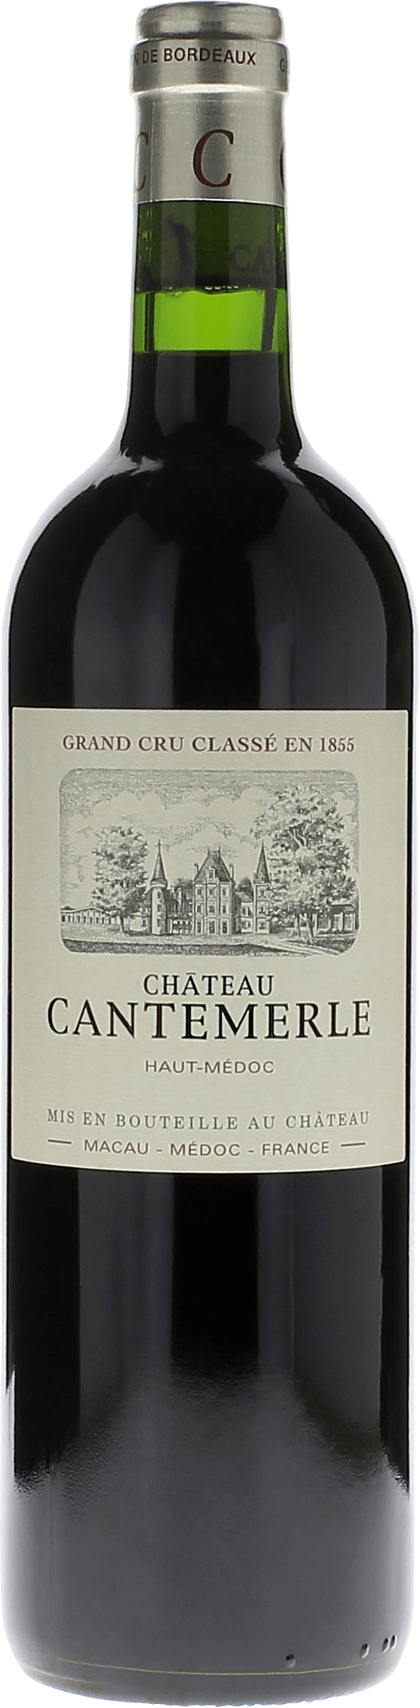 Cantemerle 2017 5me Grand cru class Mdoc, Bordeaux rouge